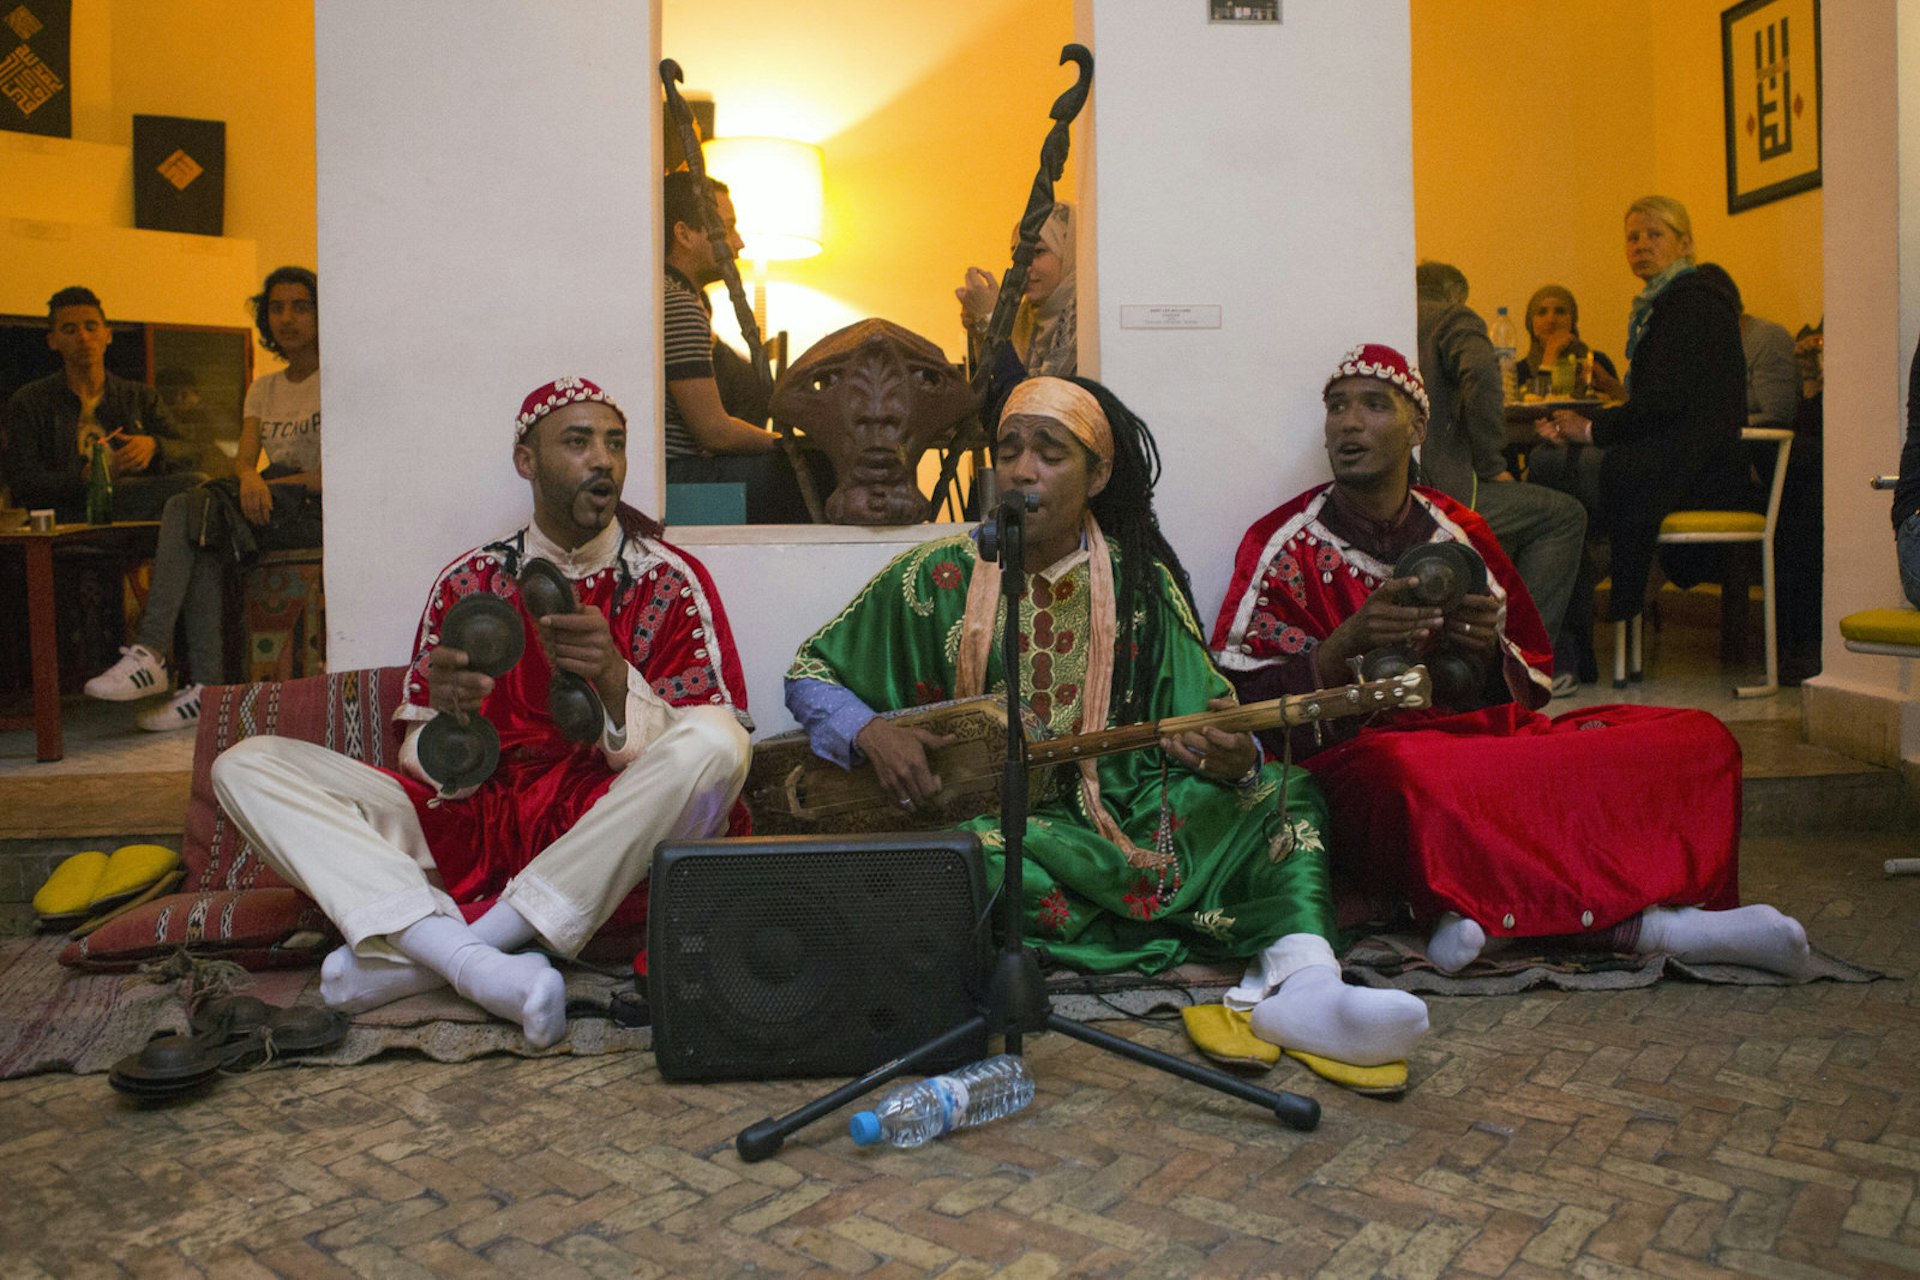 Gnaoua musicians perform at Cafe Clock, Marrakesh, Morocco